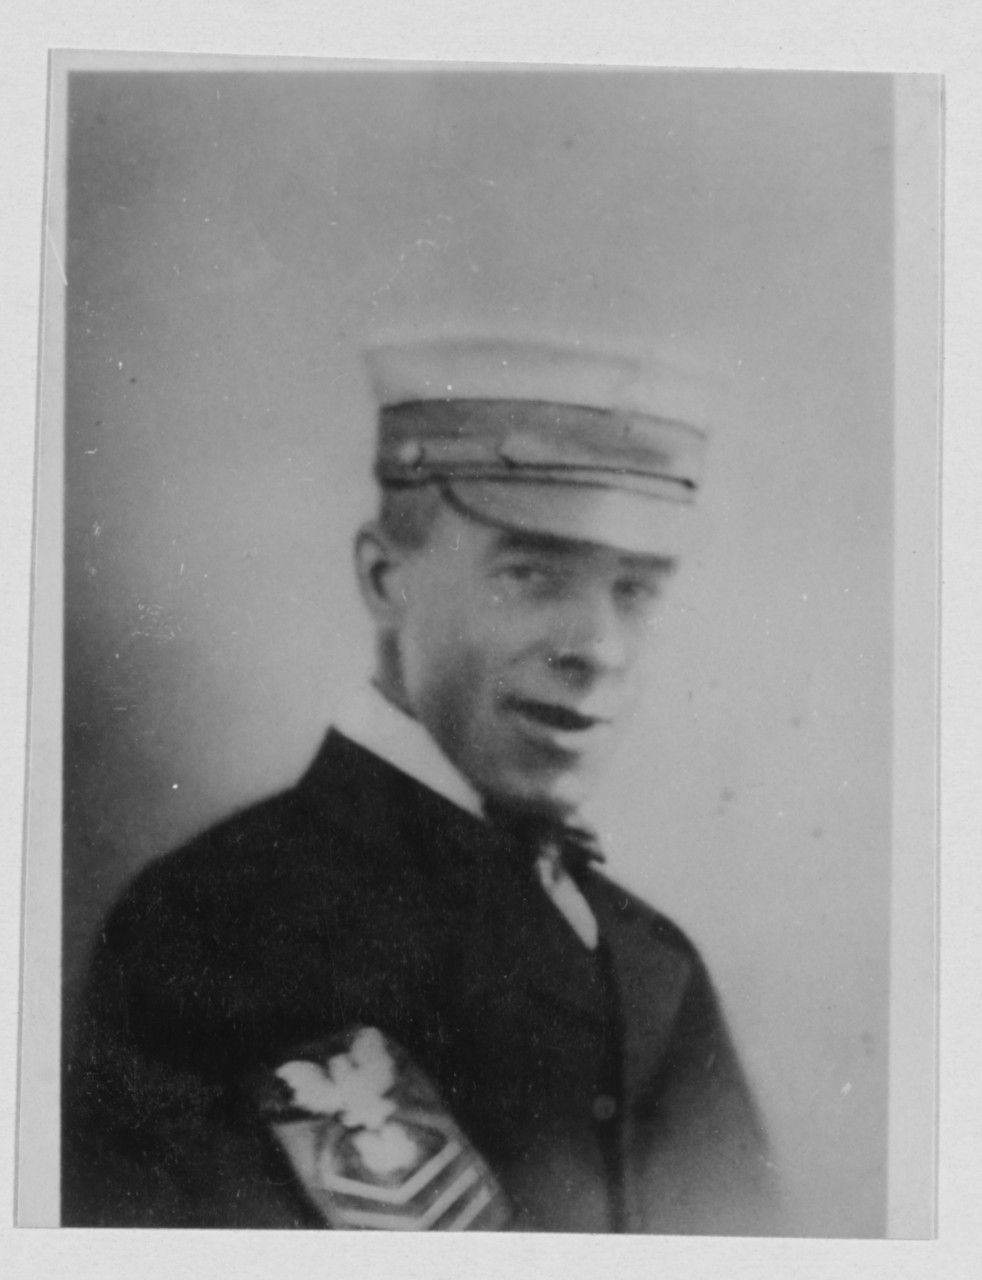 McCausland, Edward N. C. B. M. USN. (Navy Cross)